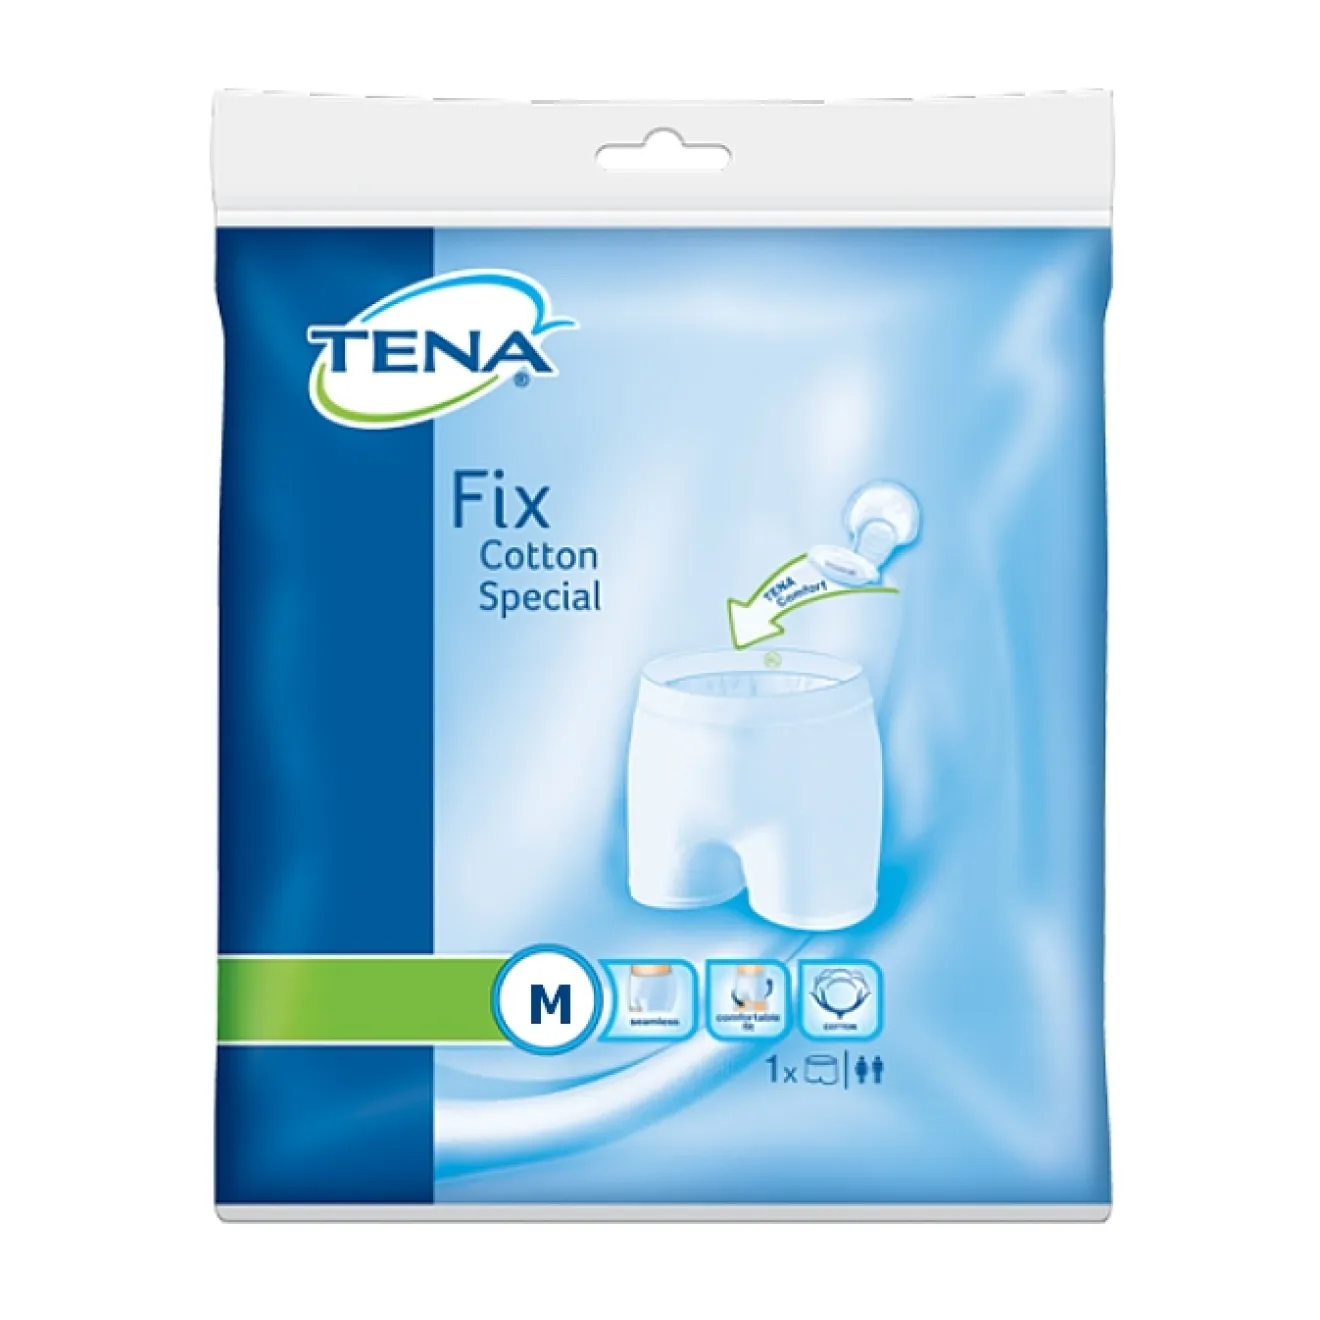 TENA FIX Cotton Special M Fixierhosen 1 ST